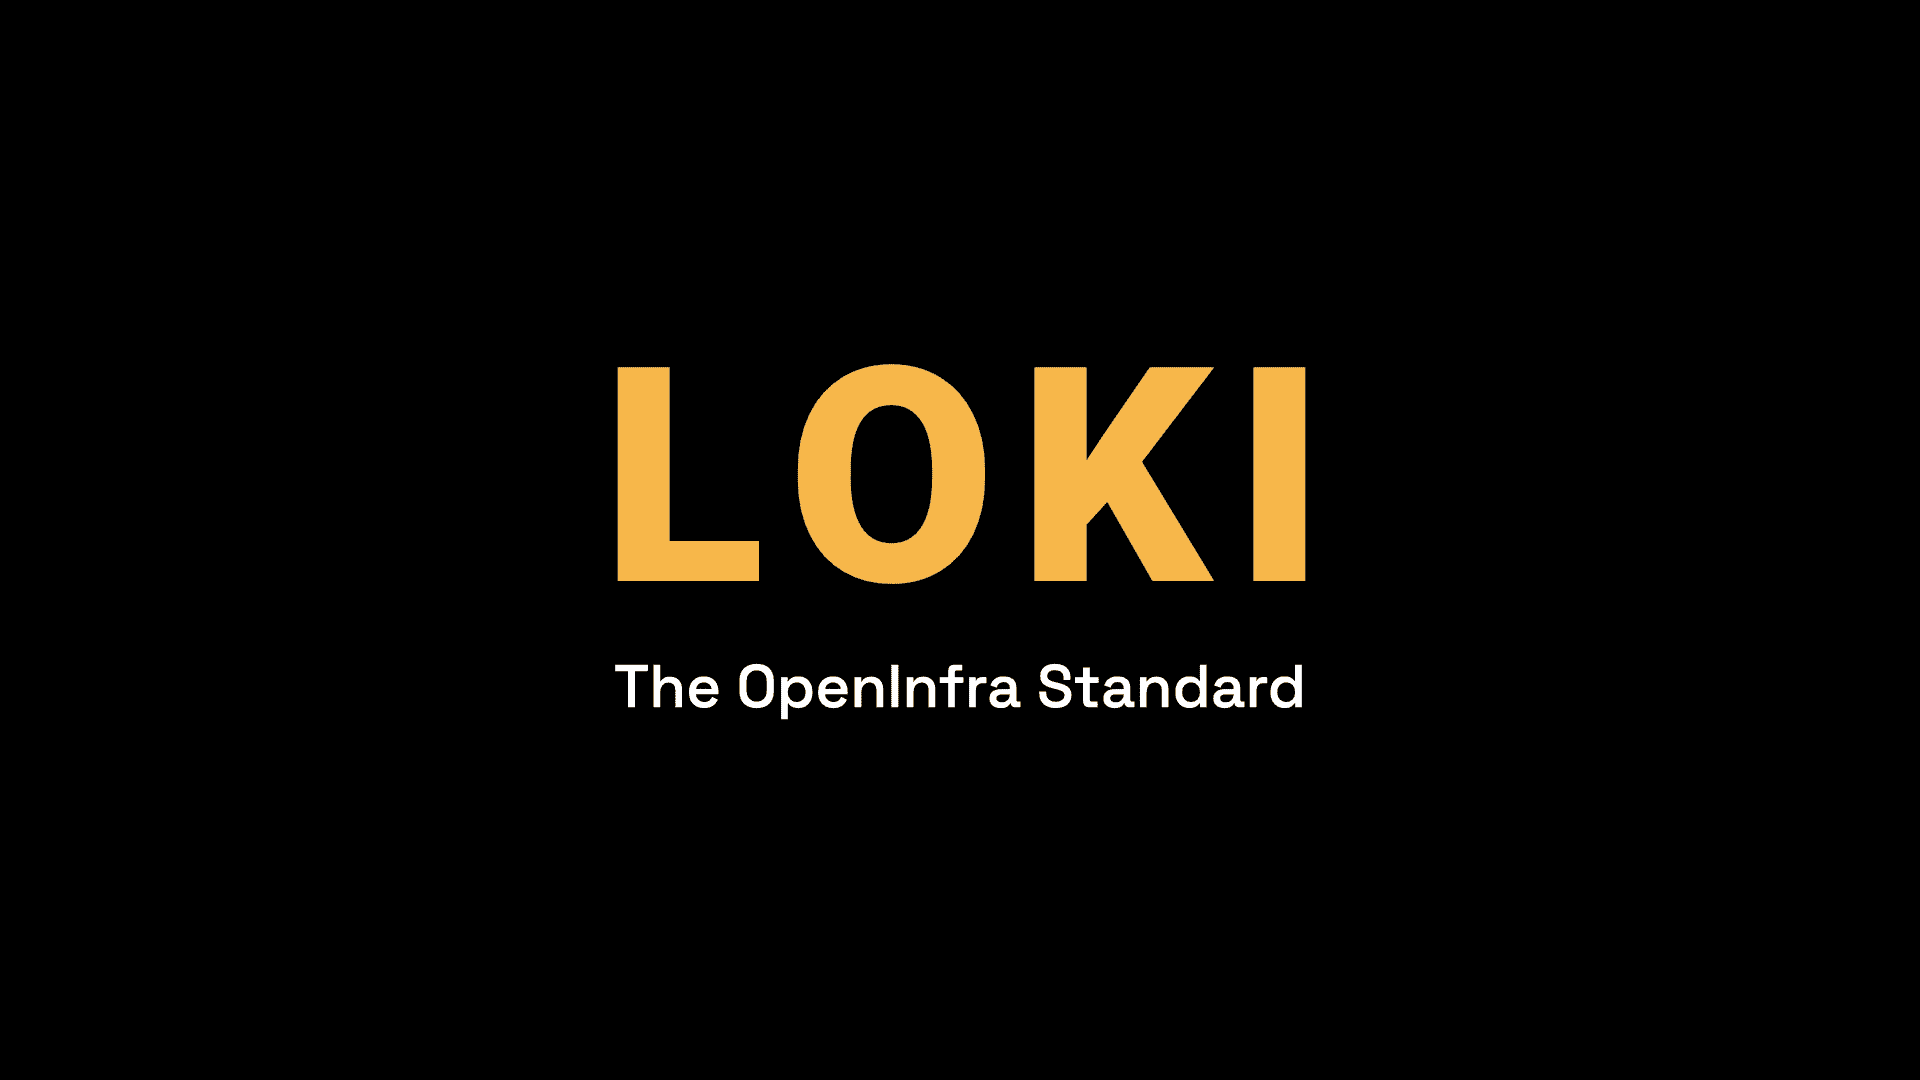 LOKI: The OpenInfra Standard